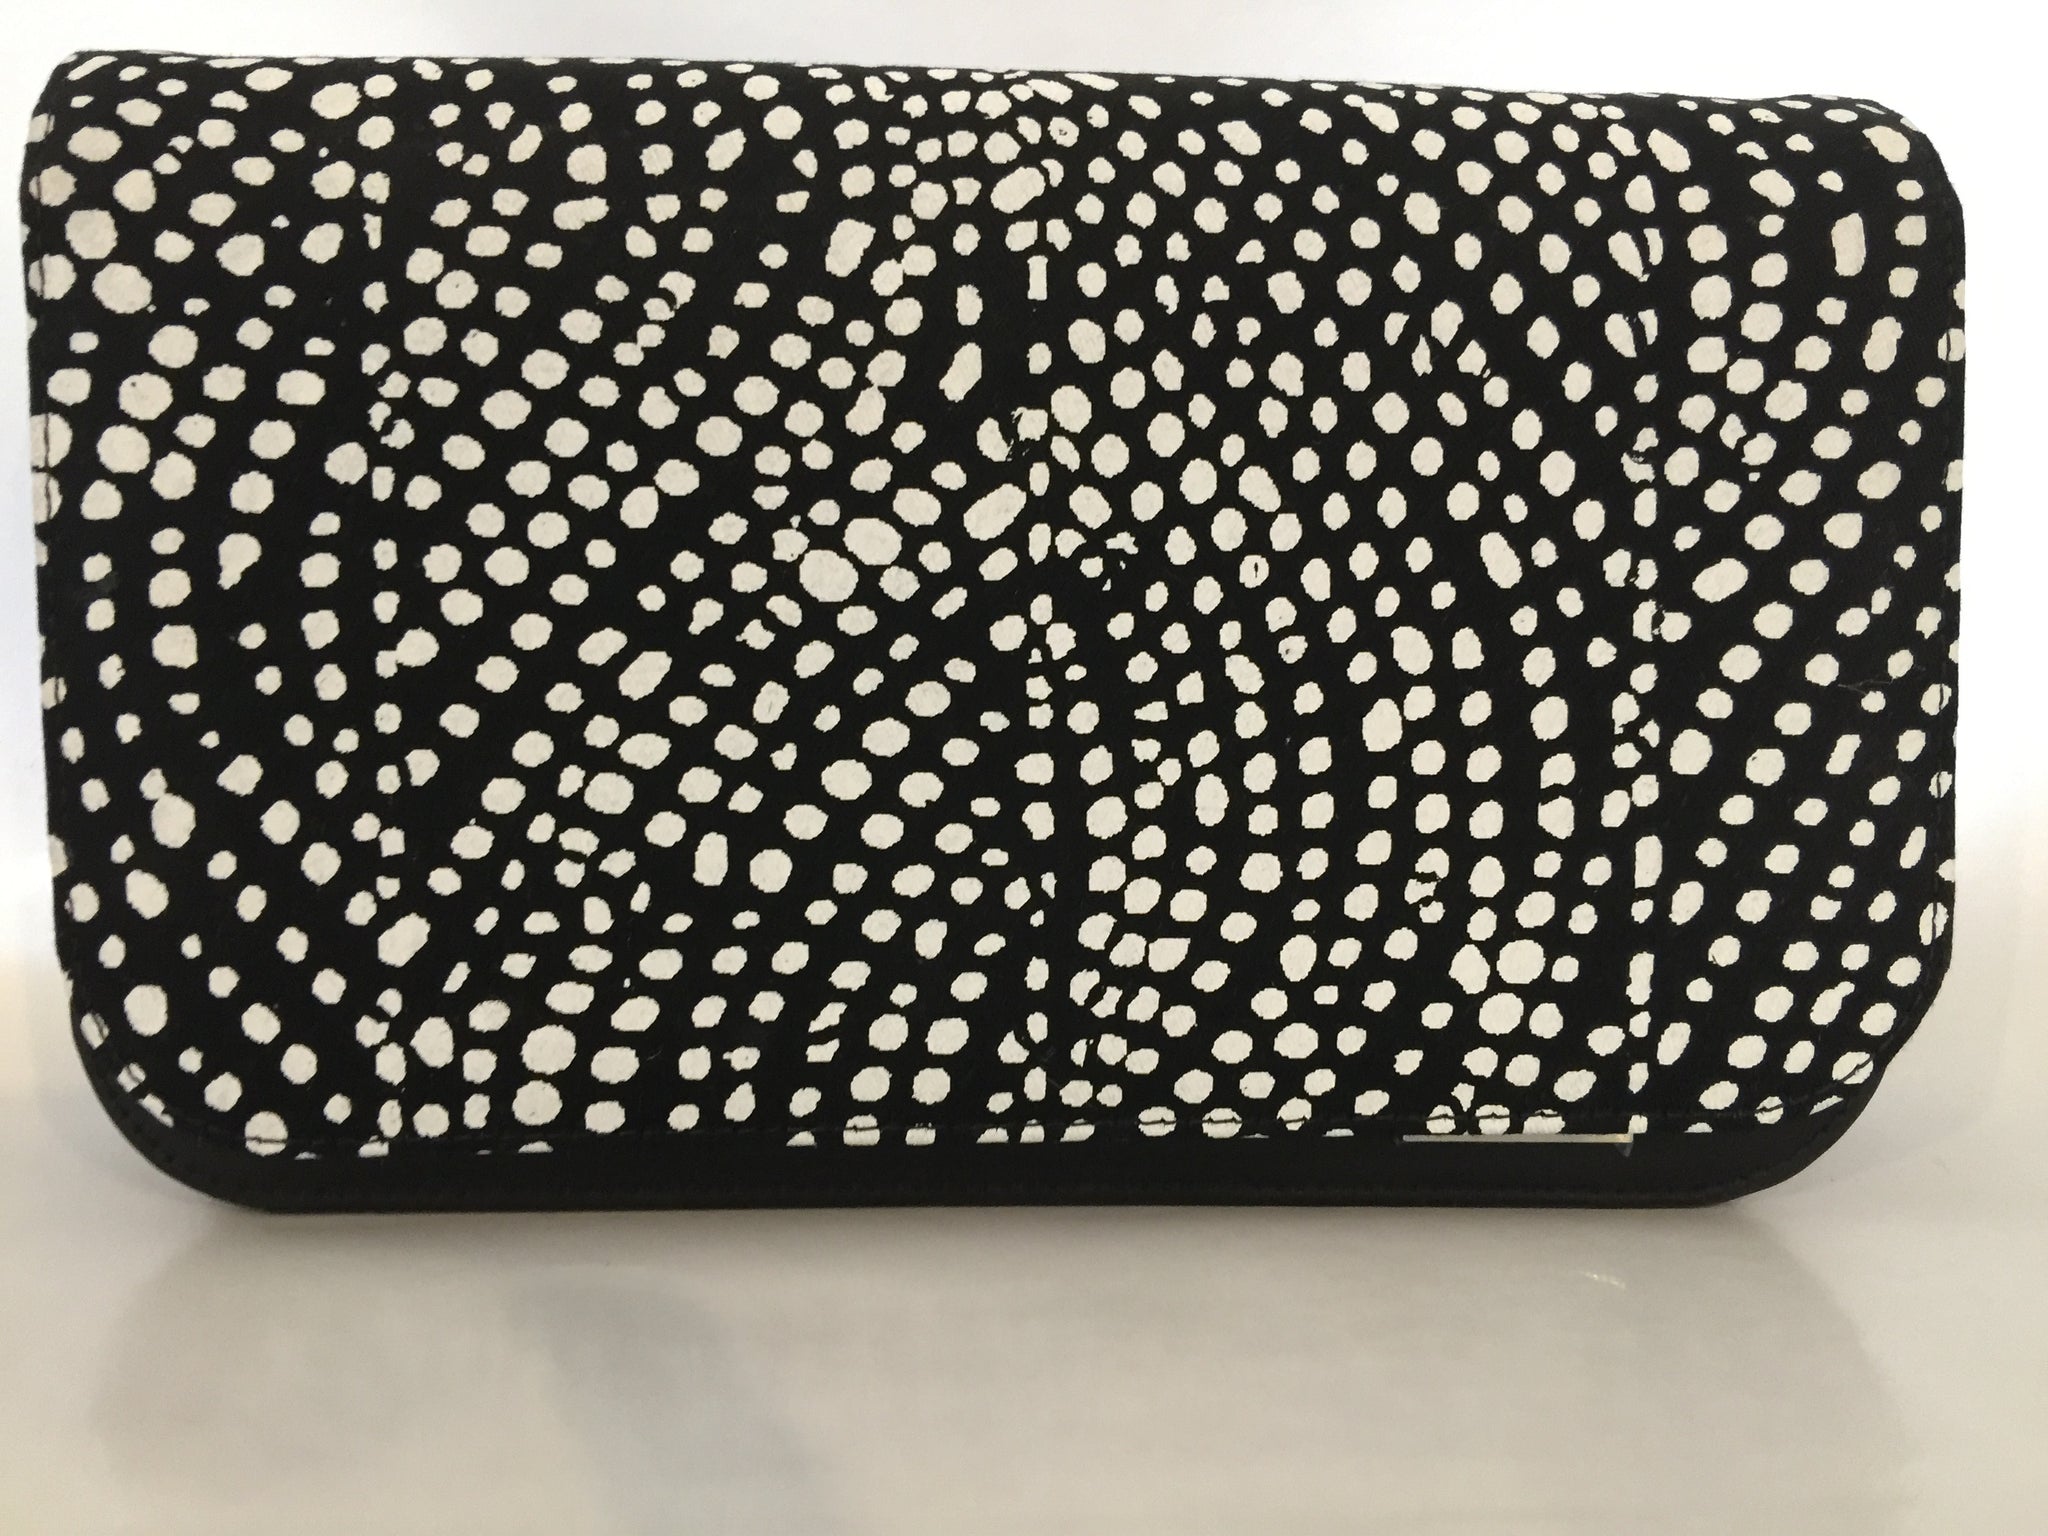 Meg handbag featuring Winga ( waves) by Aboriginal artist Maria Josette Orsto, Tiwi Designs